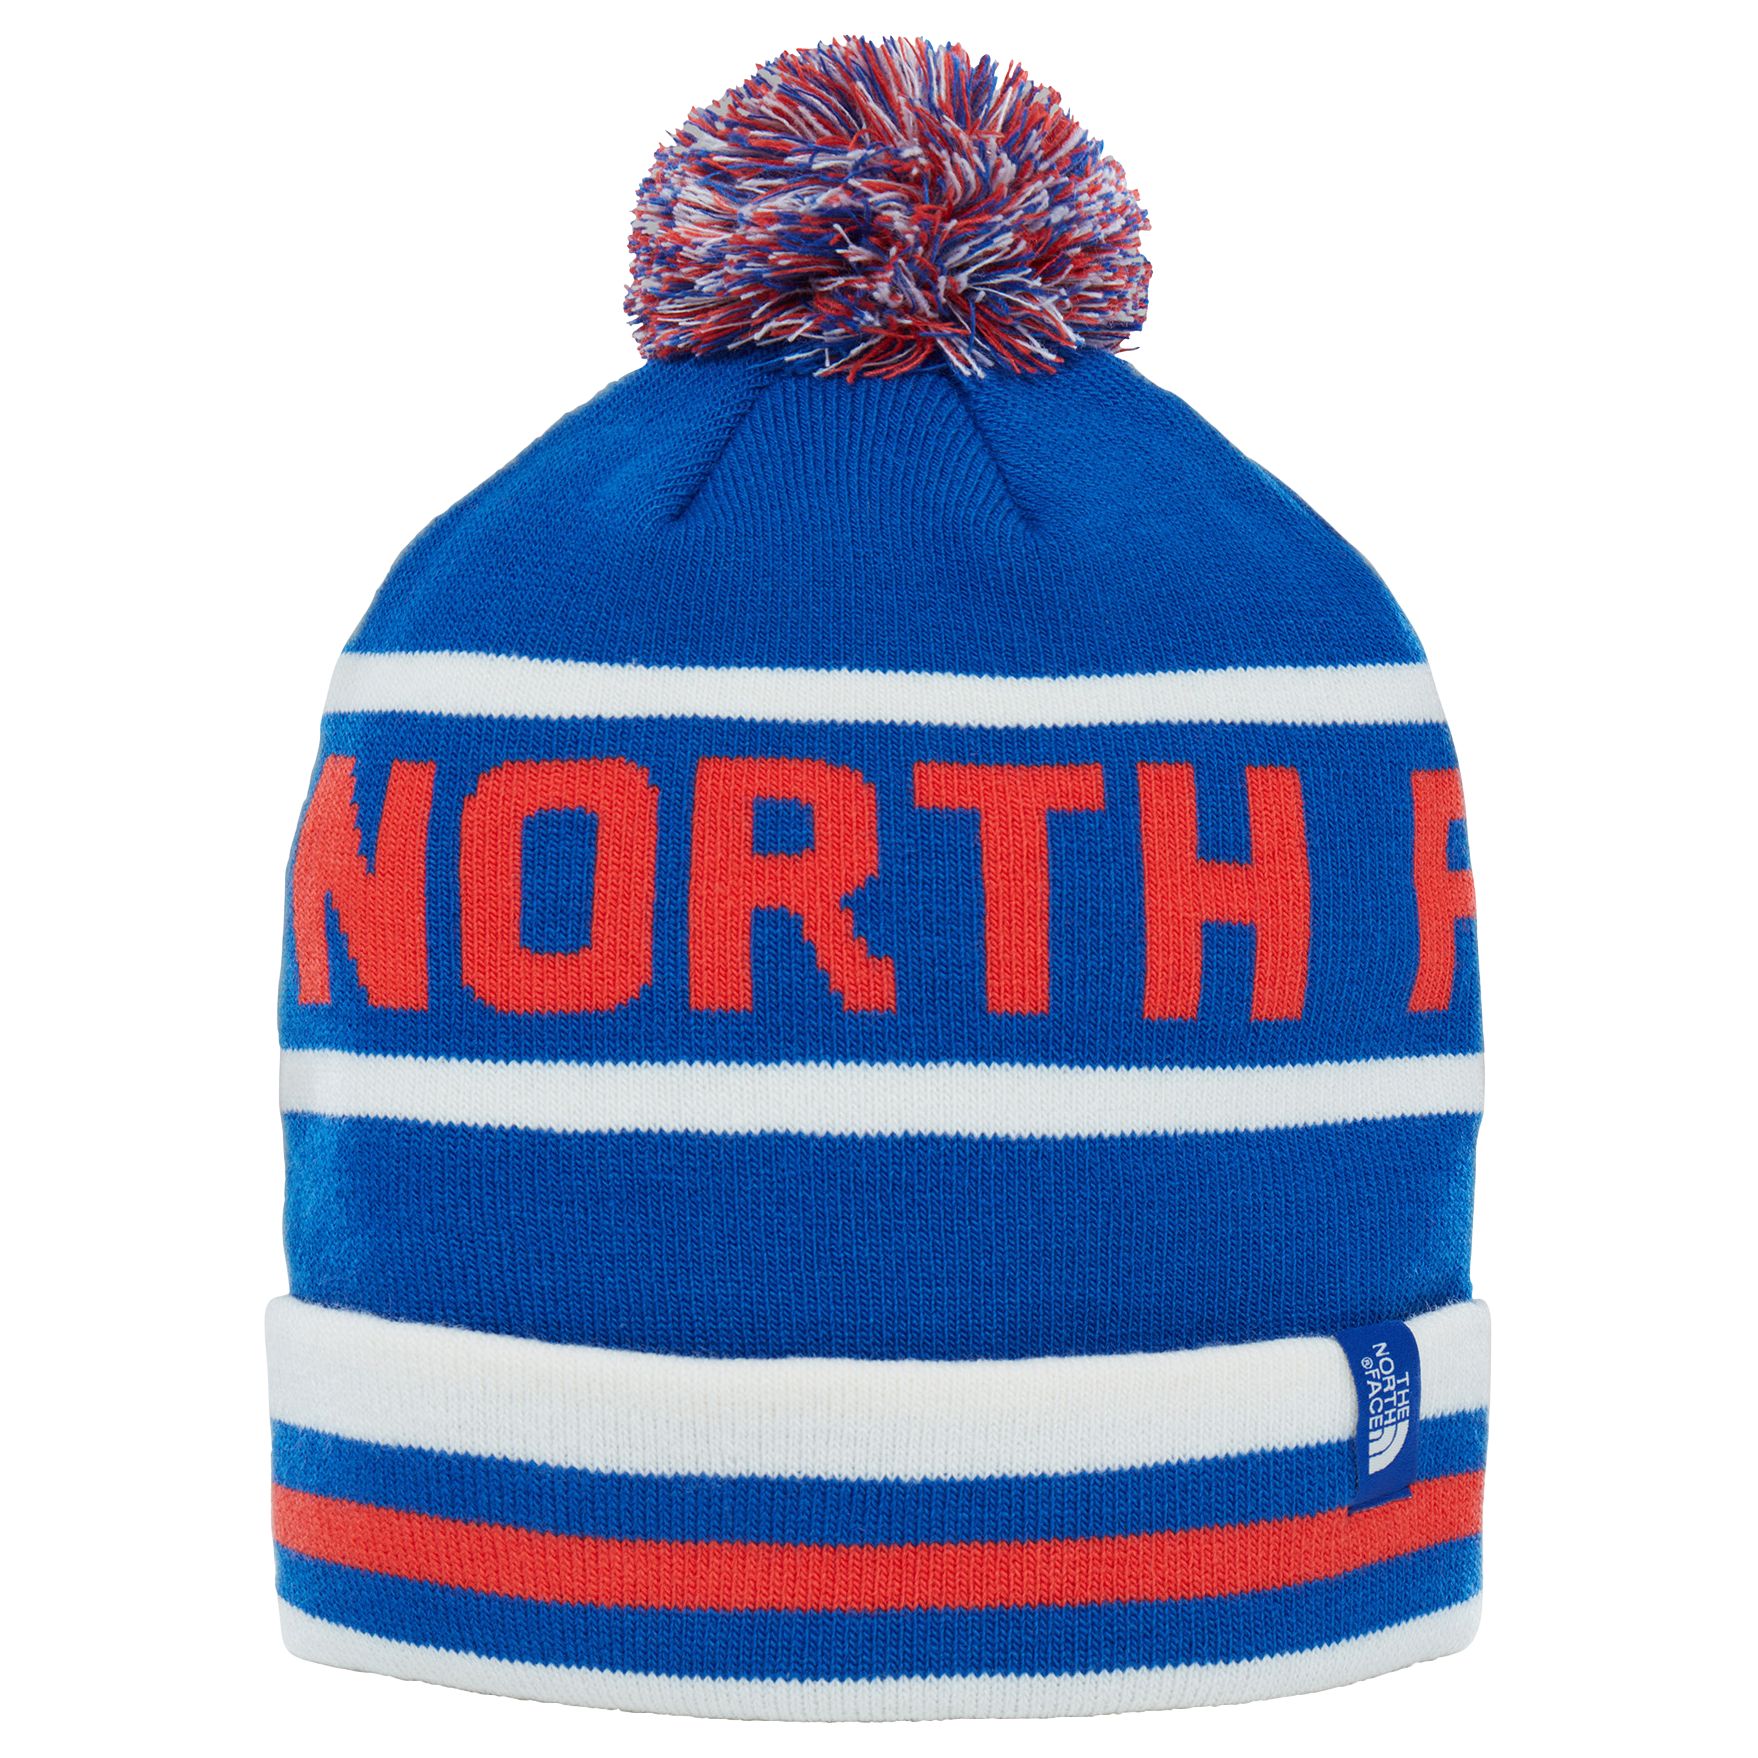 north face bobble hat mens